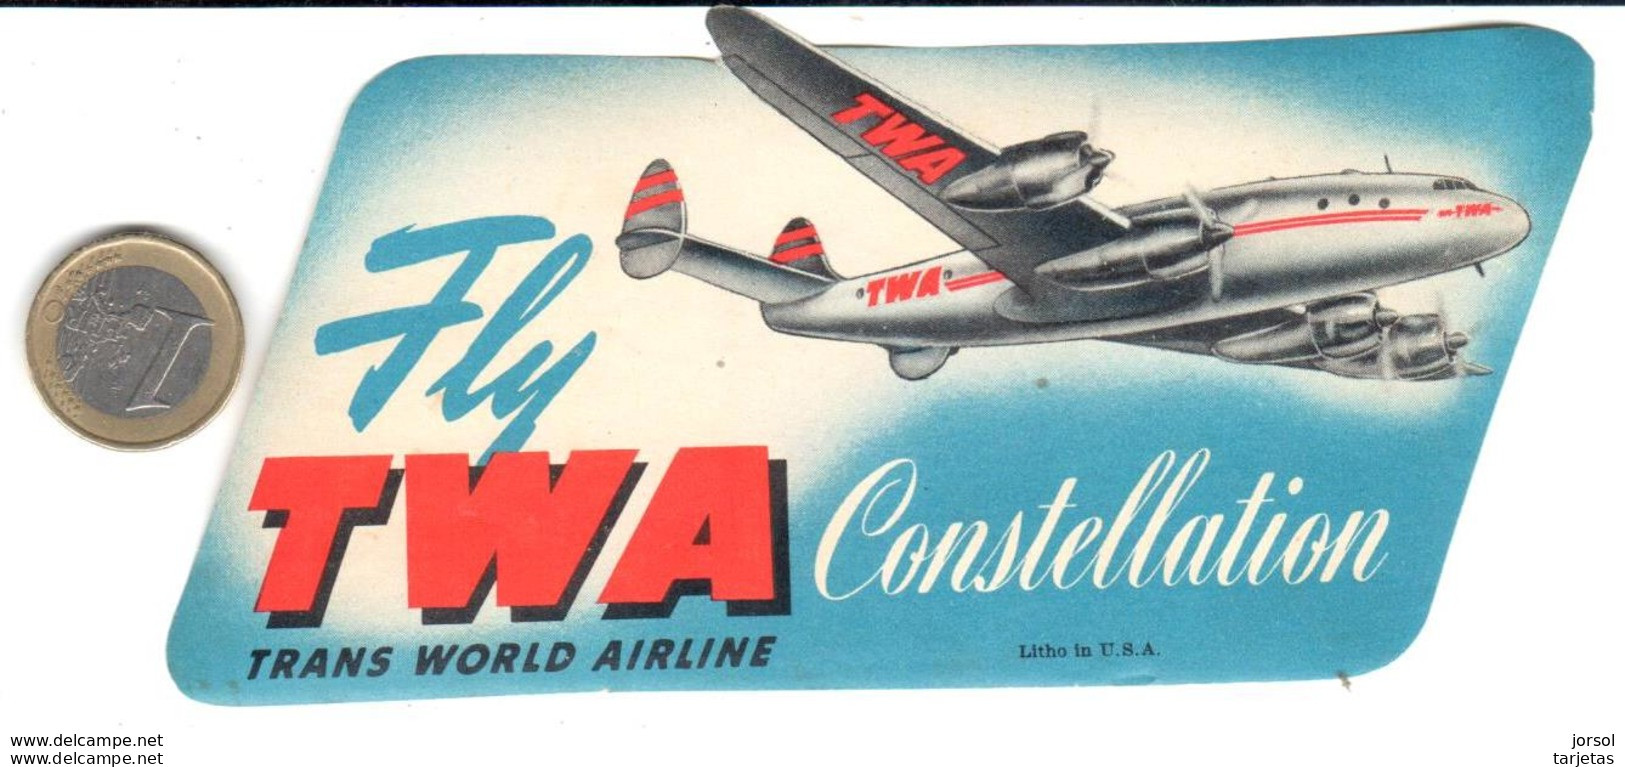 ETIQUETA DE AVION  - FLY TWA CONSTELLATION -TRANS WORLD AIRLINE - Etiquetas De Equipaje